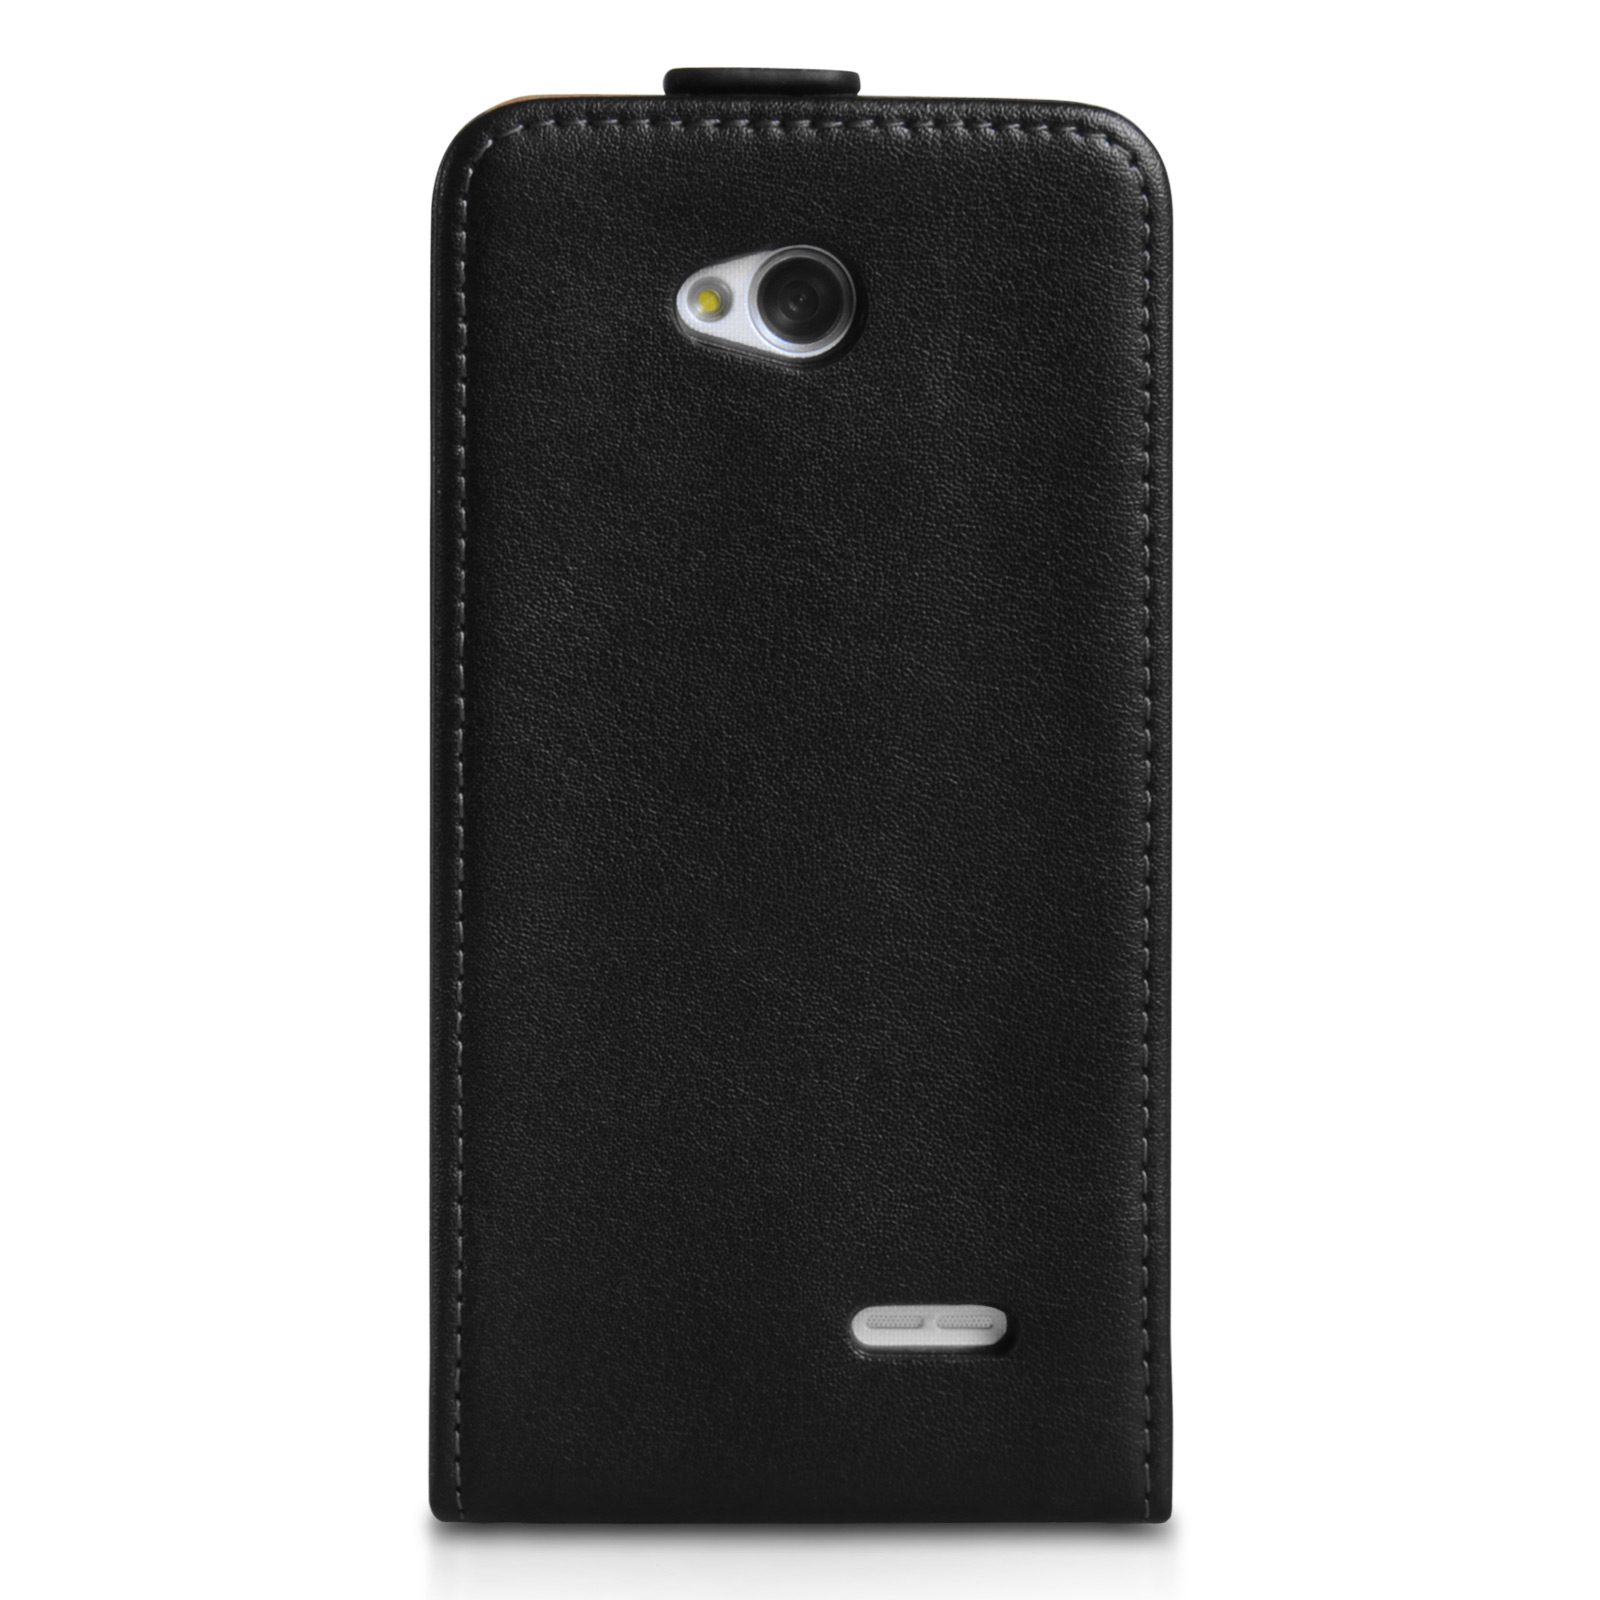 Caseflex LG L70 Real Leather Flip Case - Black